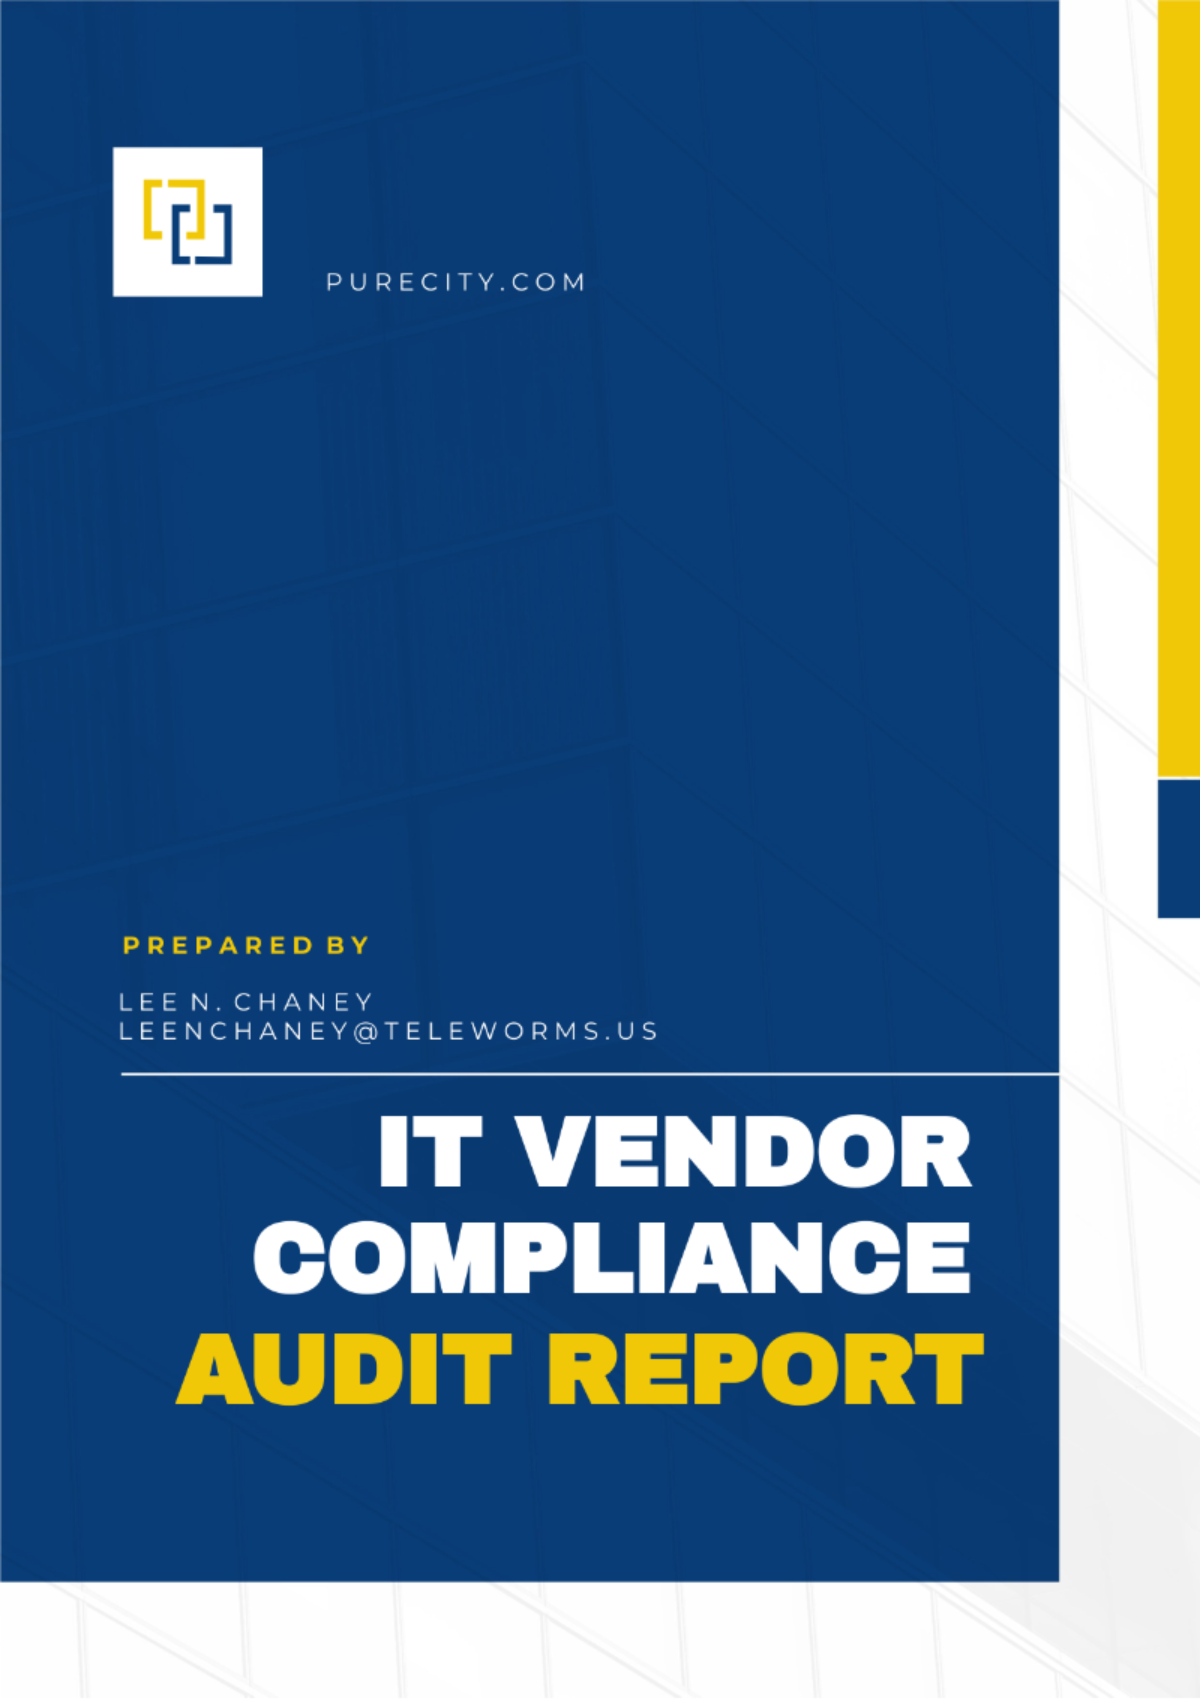 Free IT Vendor Compliance Audit Report Template